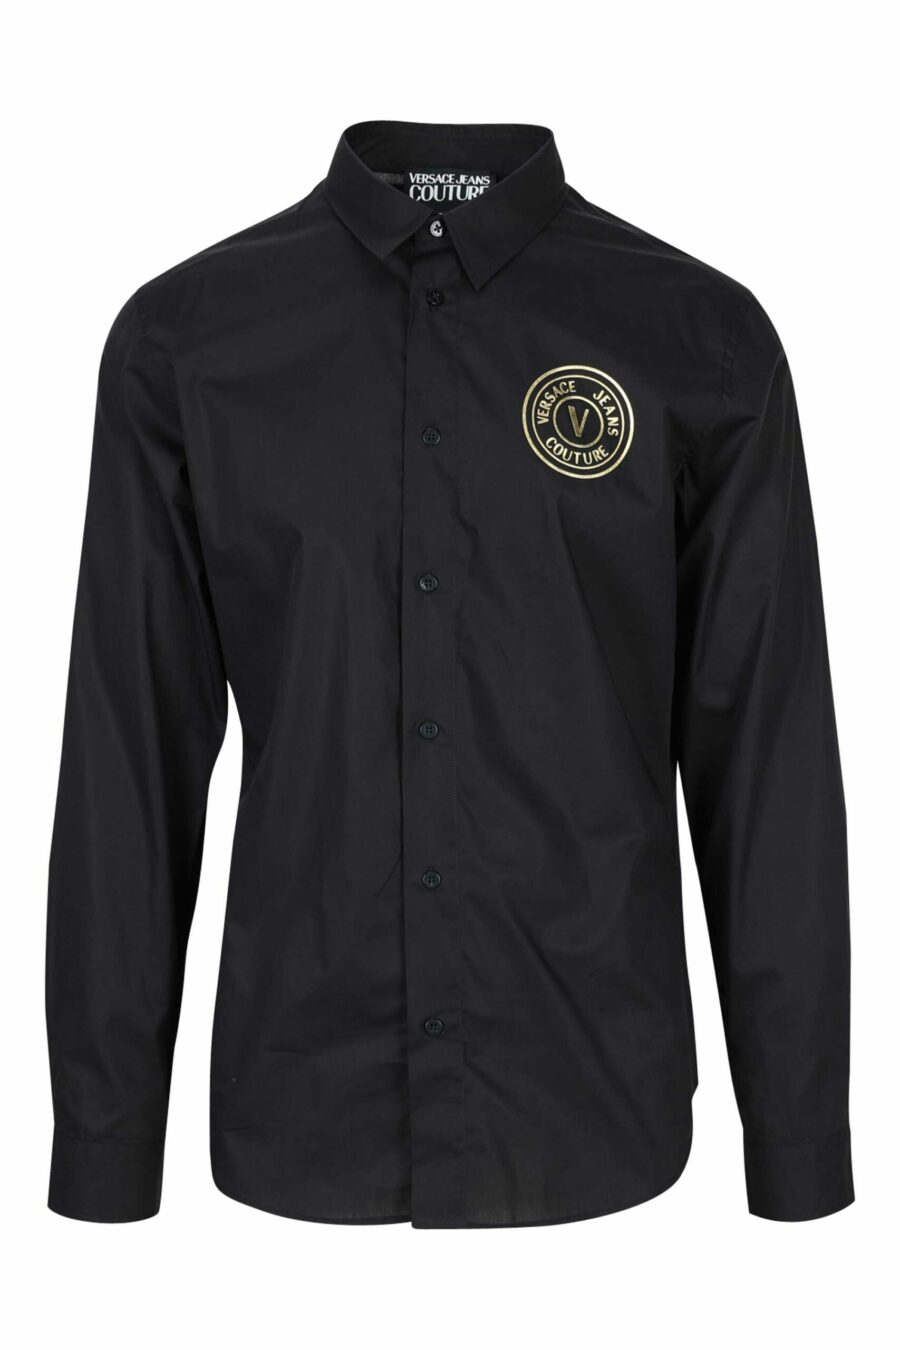 Black shirt with gold circular mini-logo - 8052019402735 1 scaled